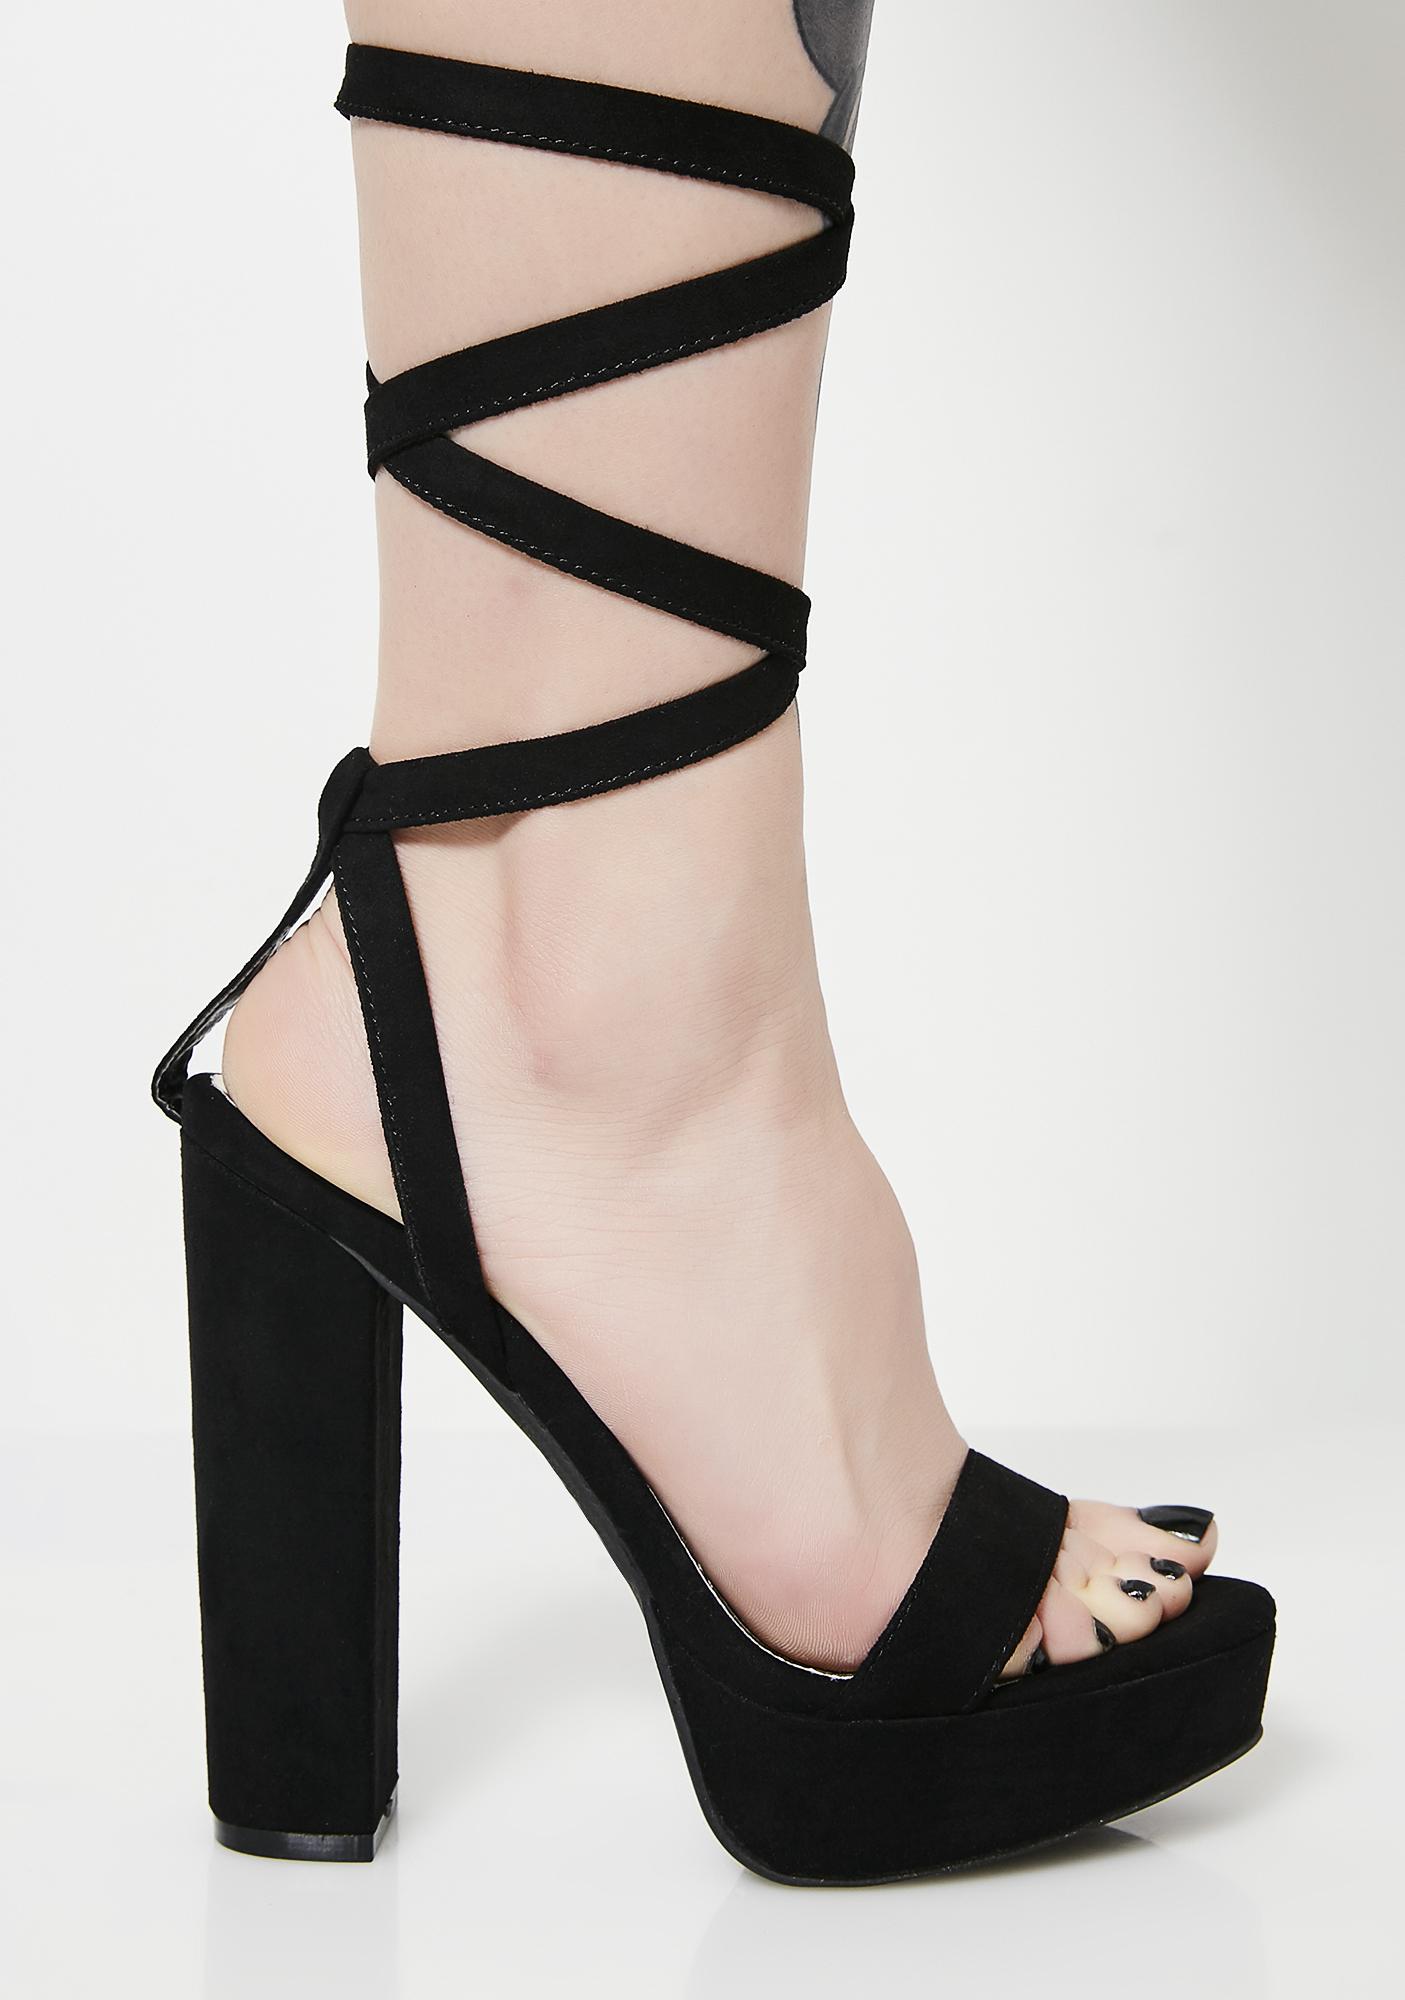 suede lace up platform heels